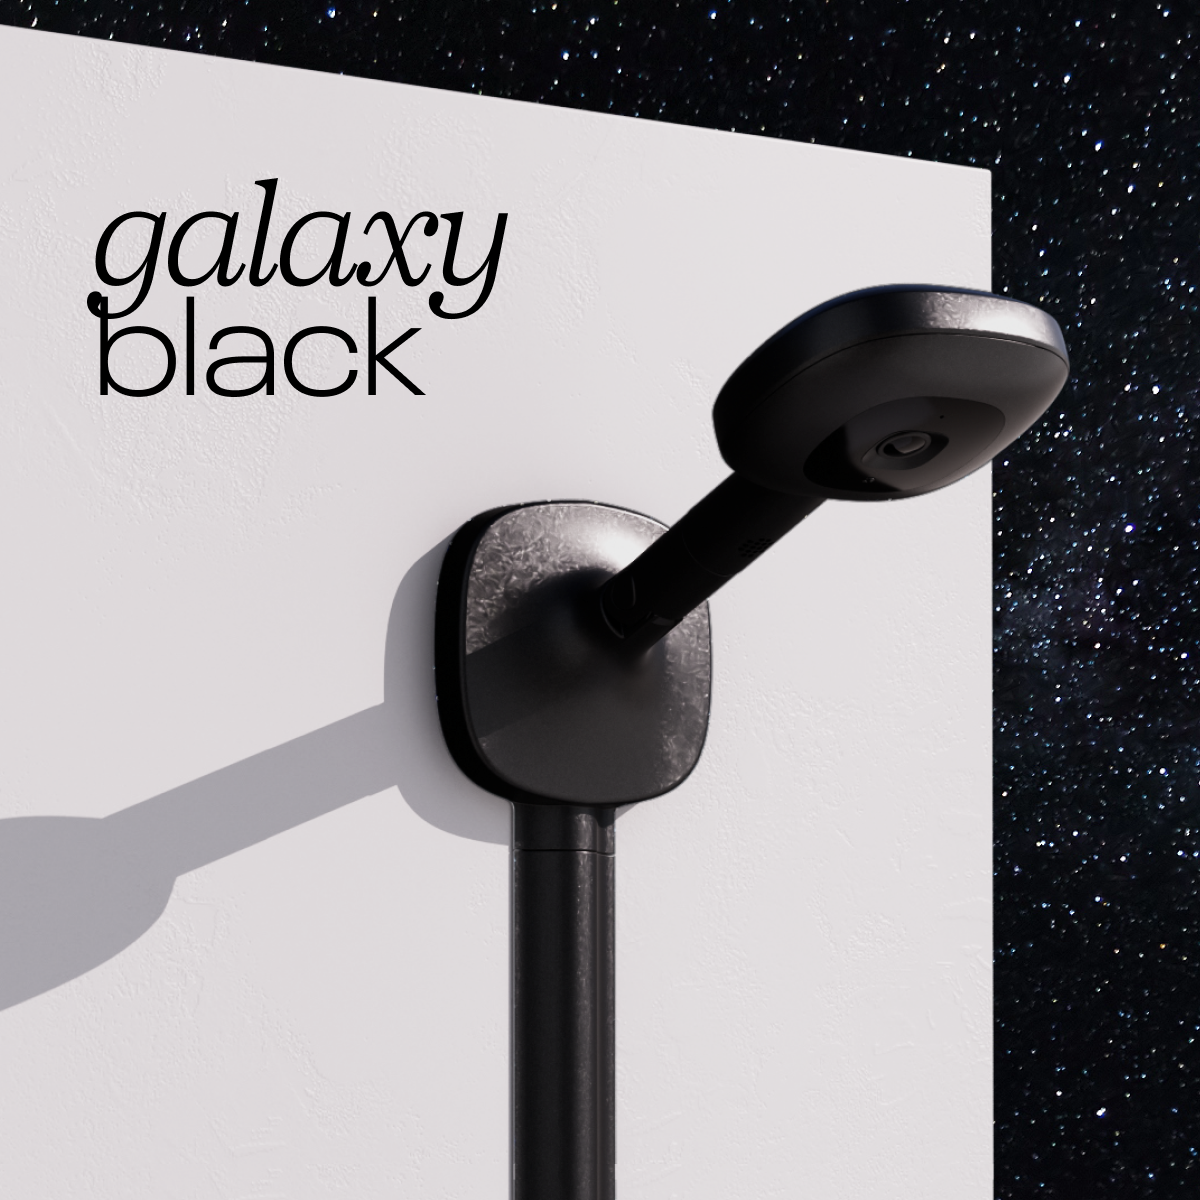 nanit pro camera + wall mount in galaxy black #color_galaxy black